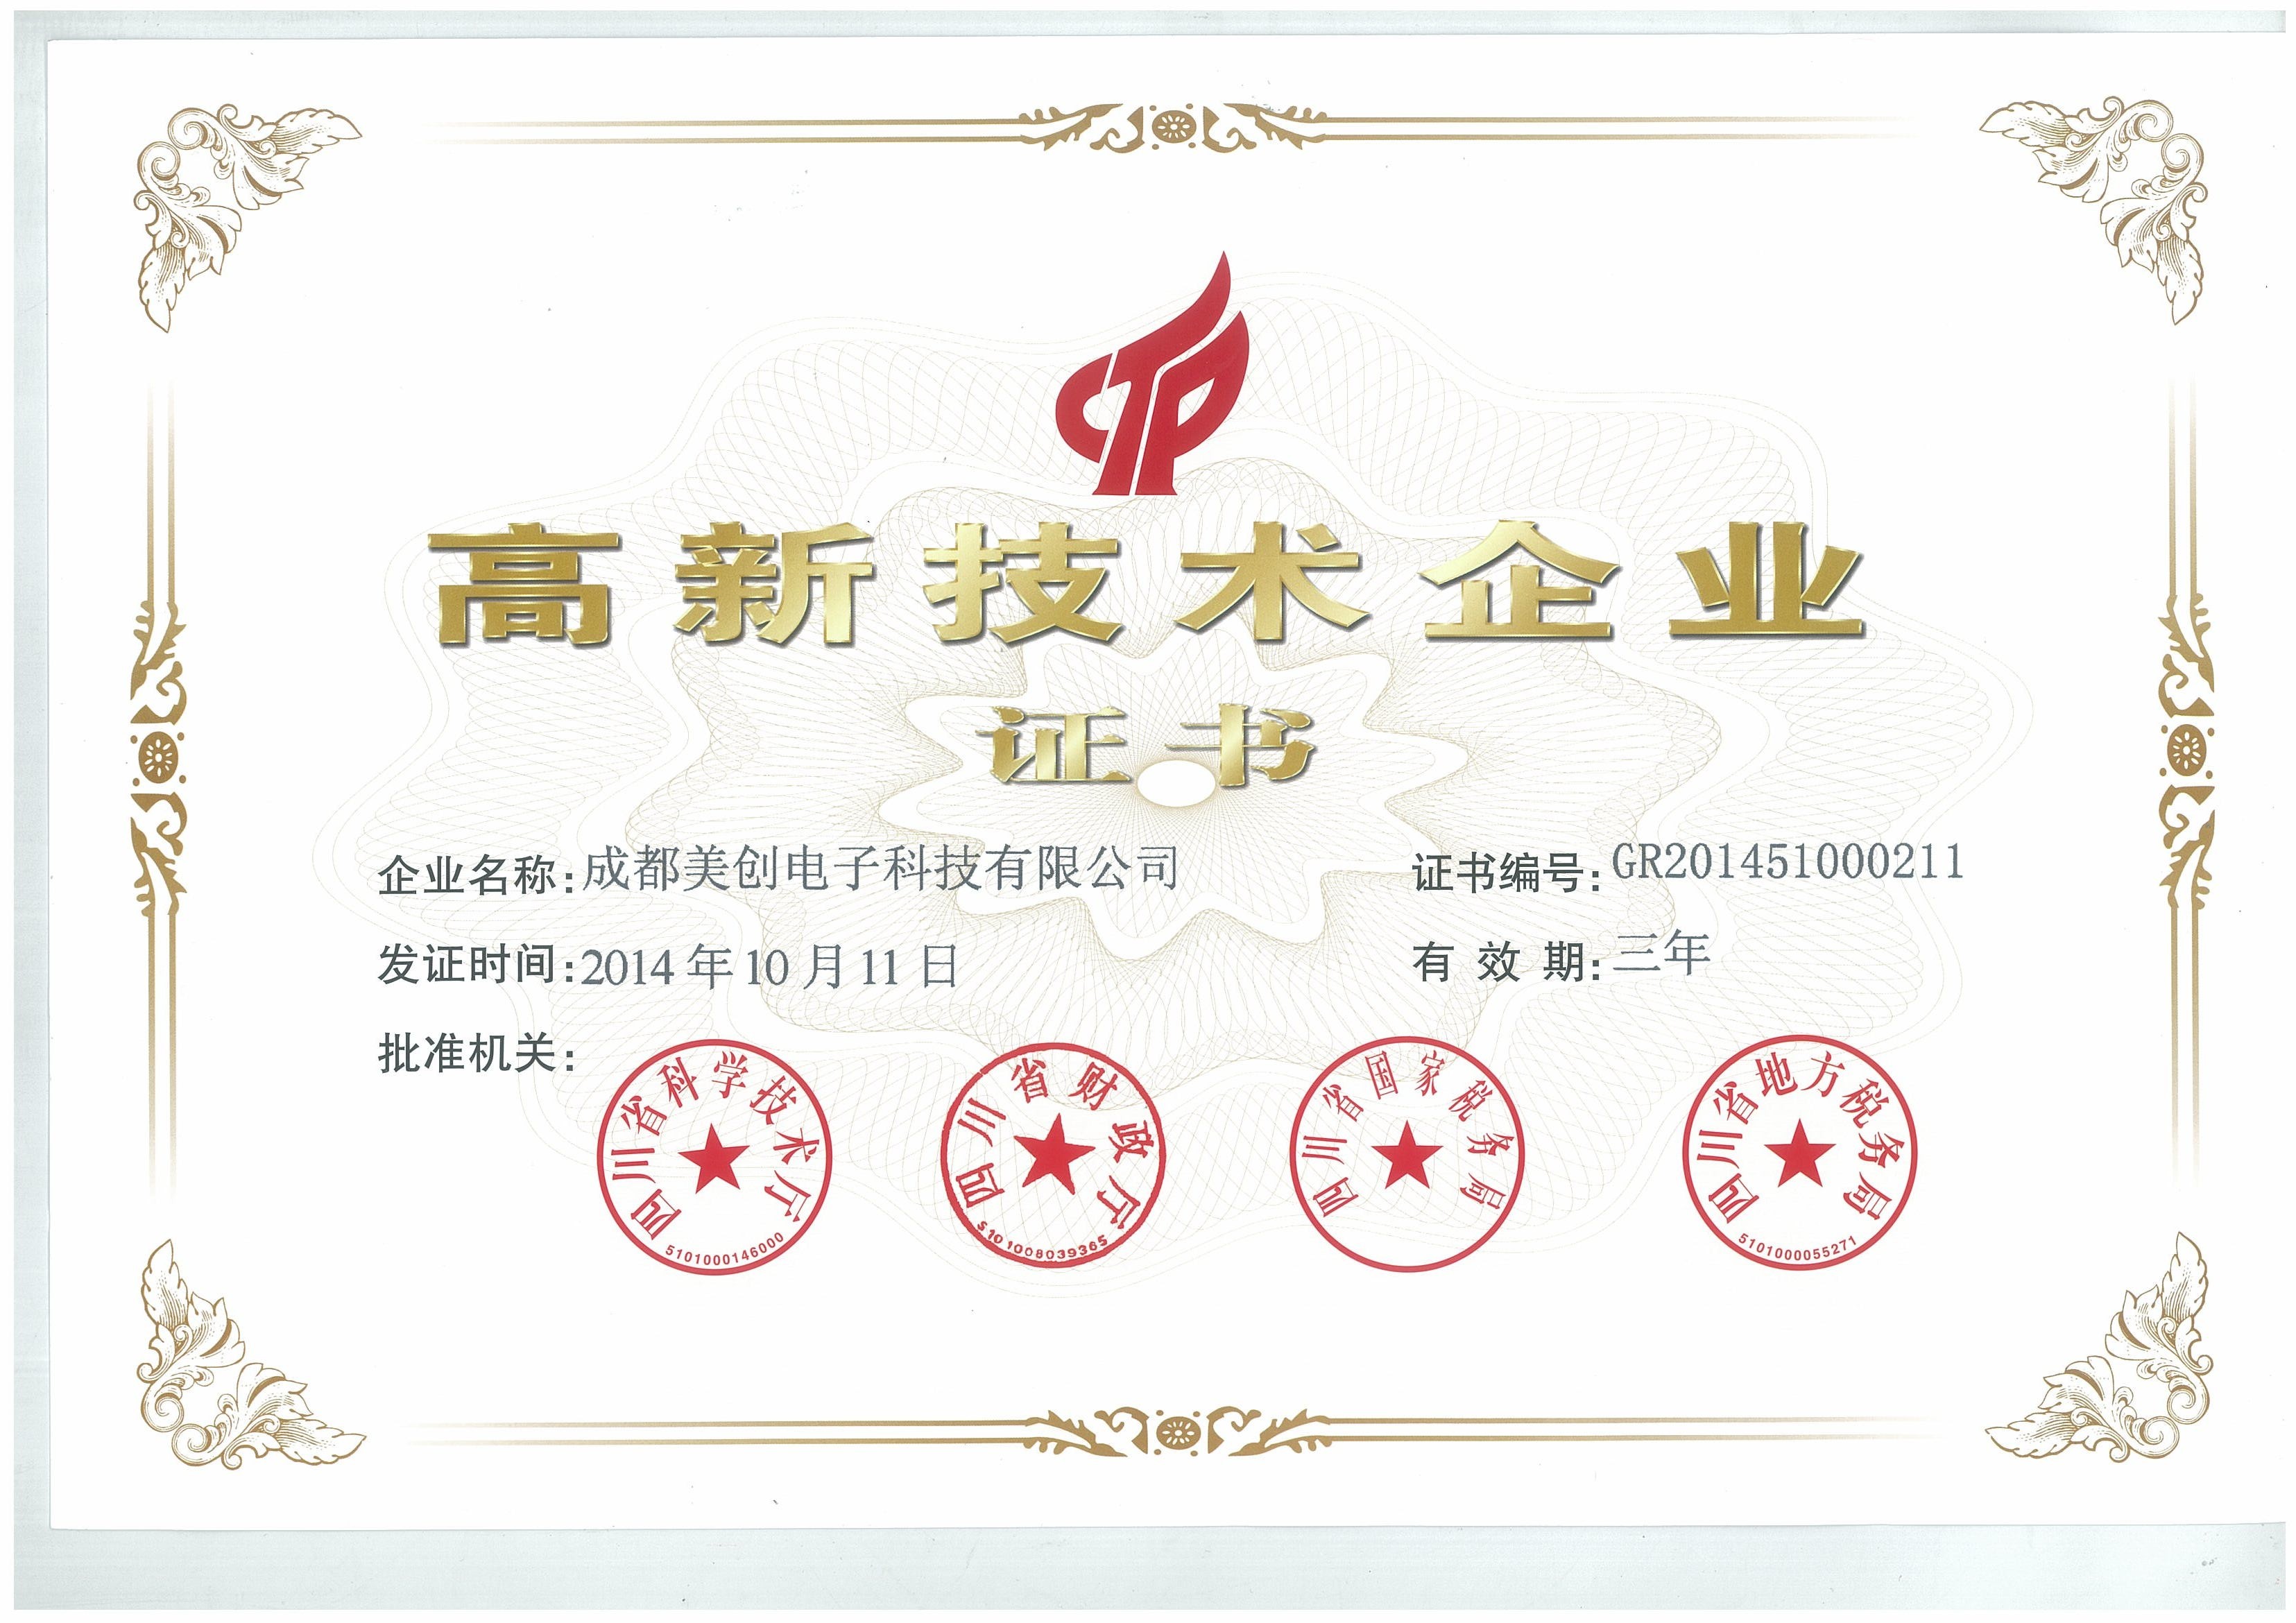 Chine Chengdu Mechan Electronic Technology Co., Ltd Certifications